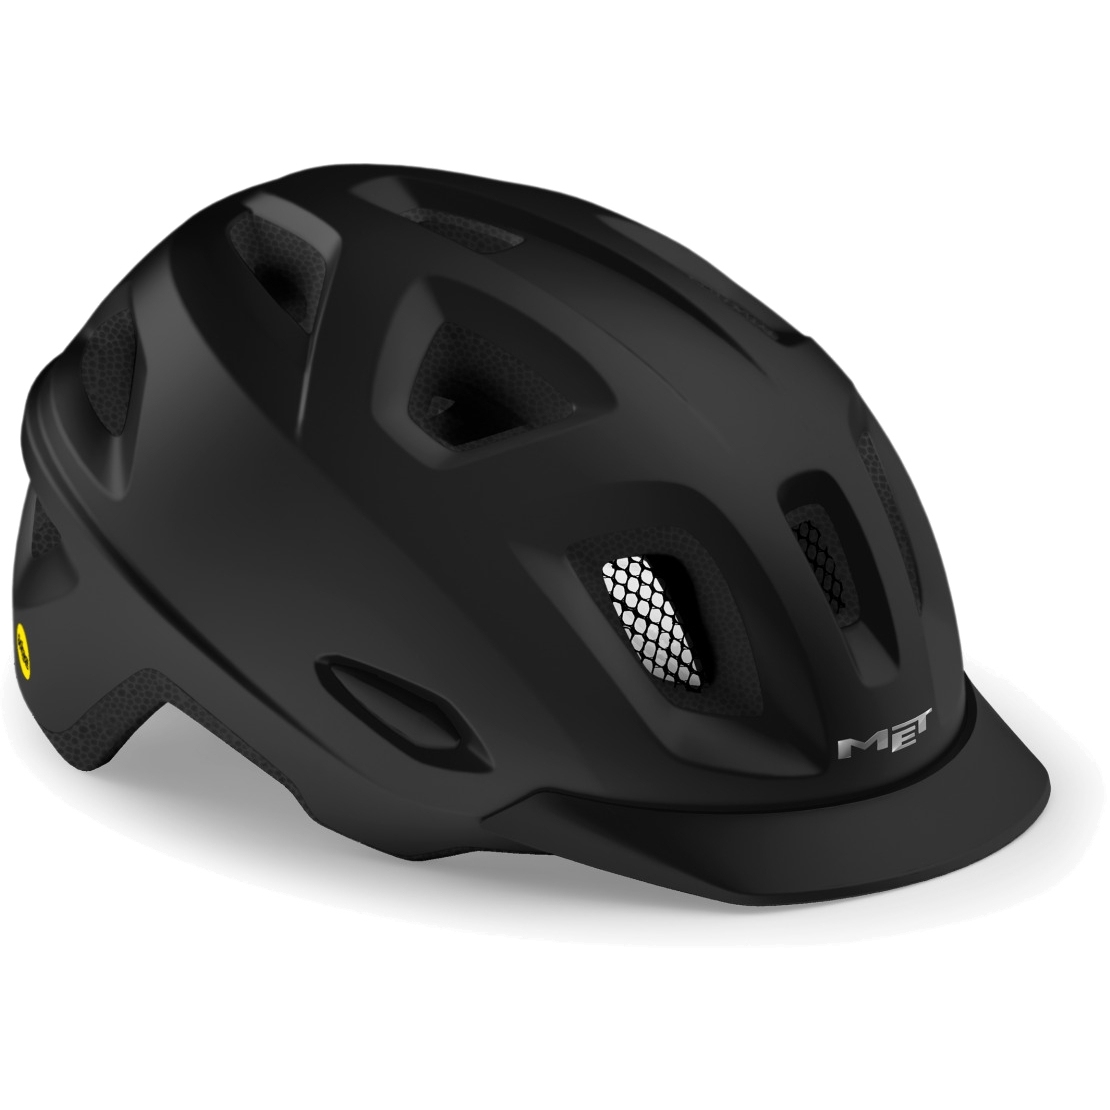 Productfoto van MET Mobilite MIPS Helmet - Black